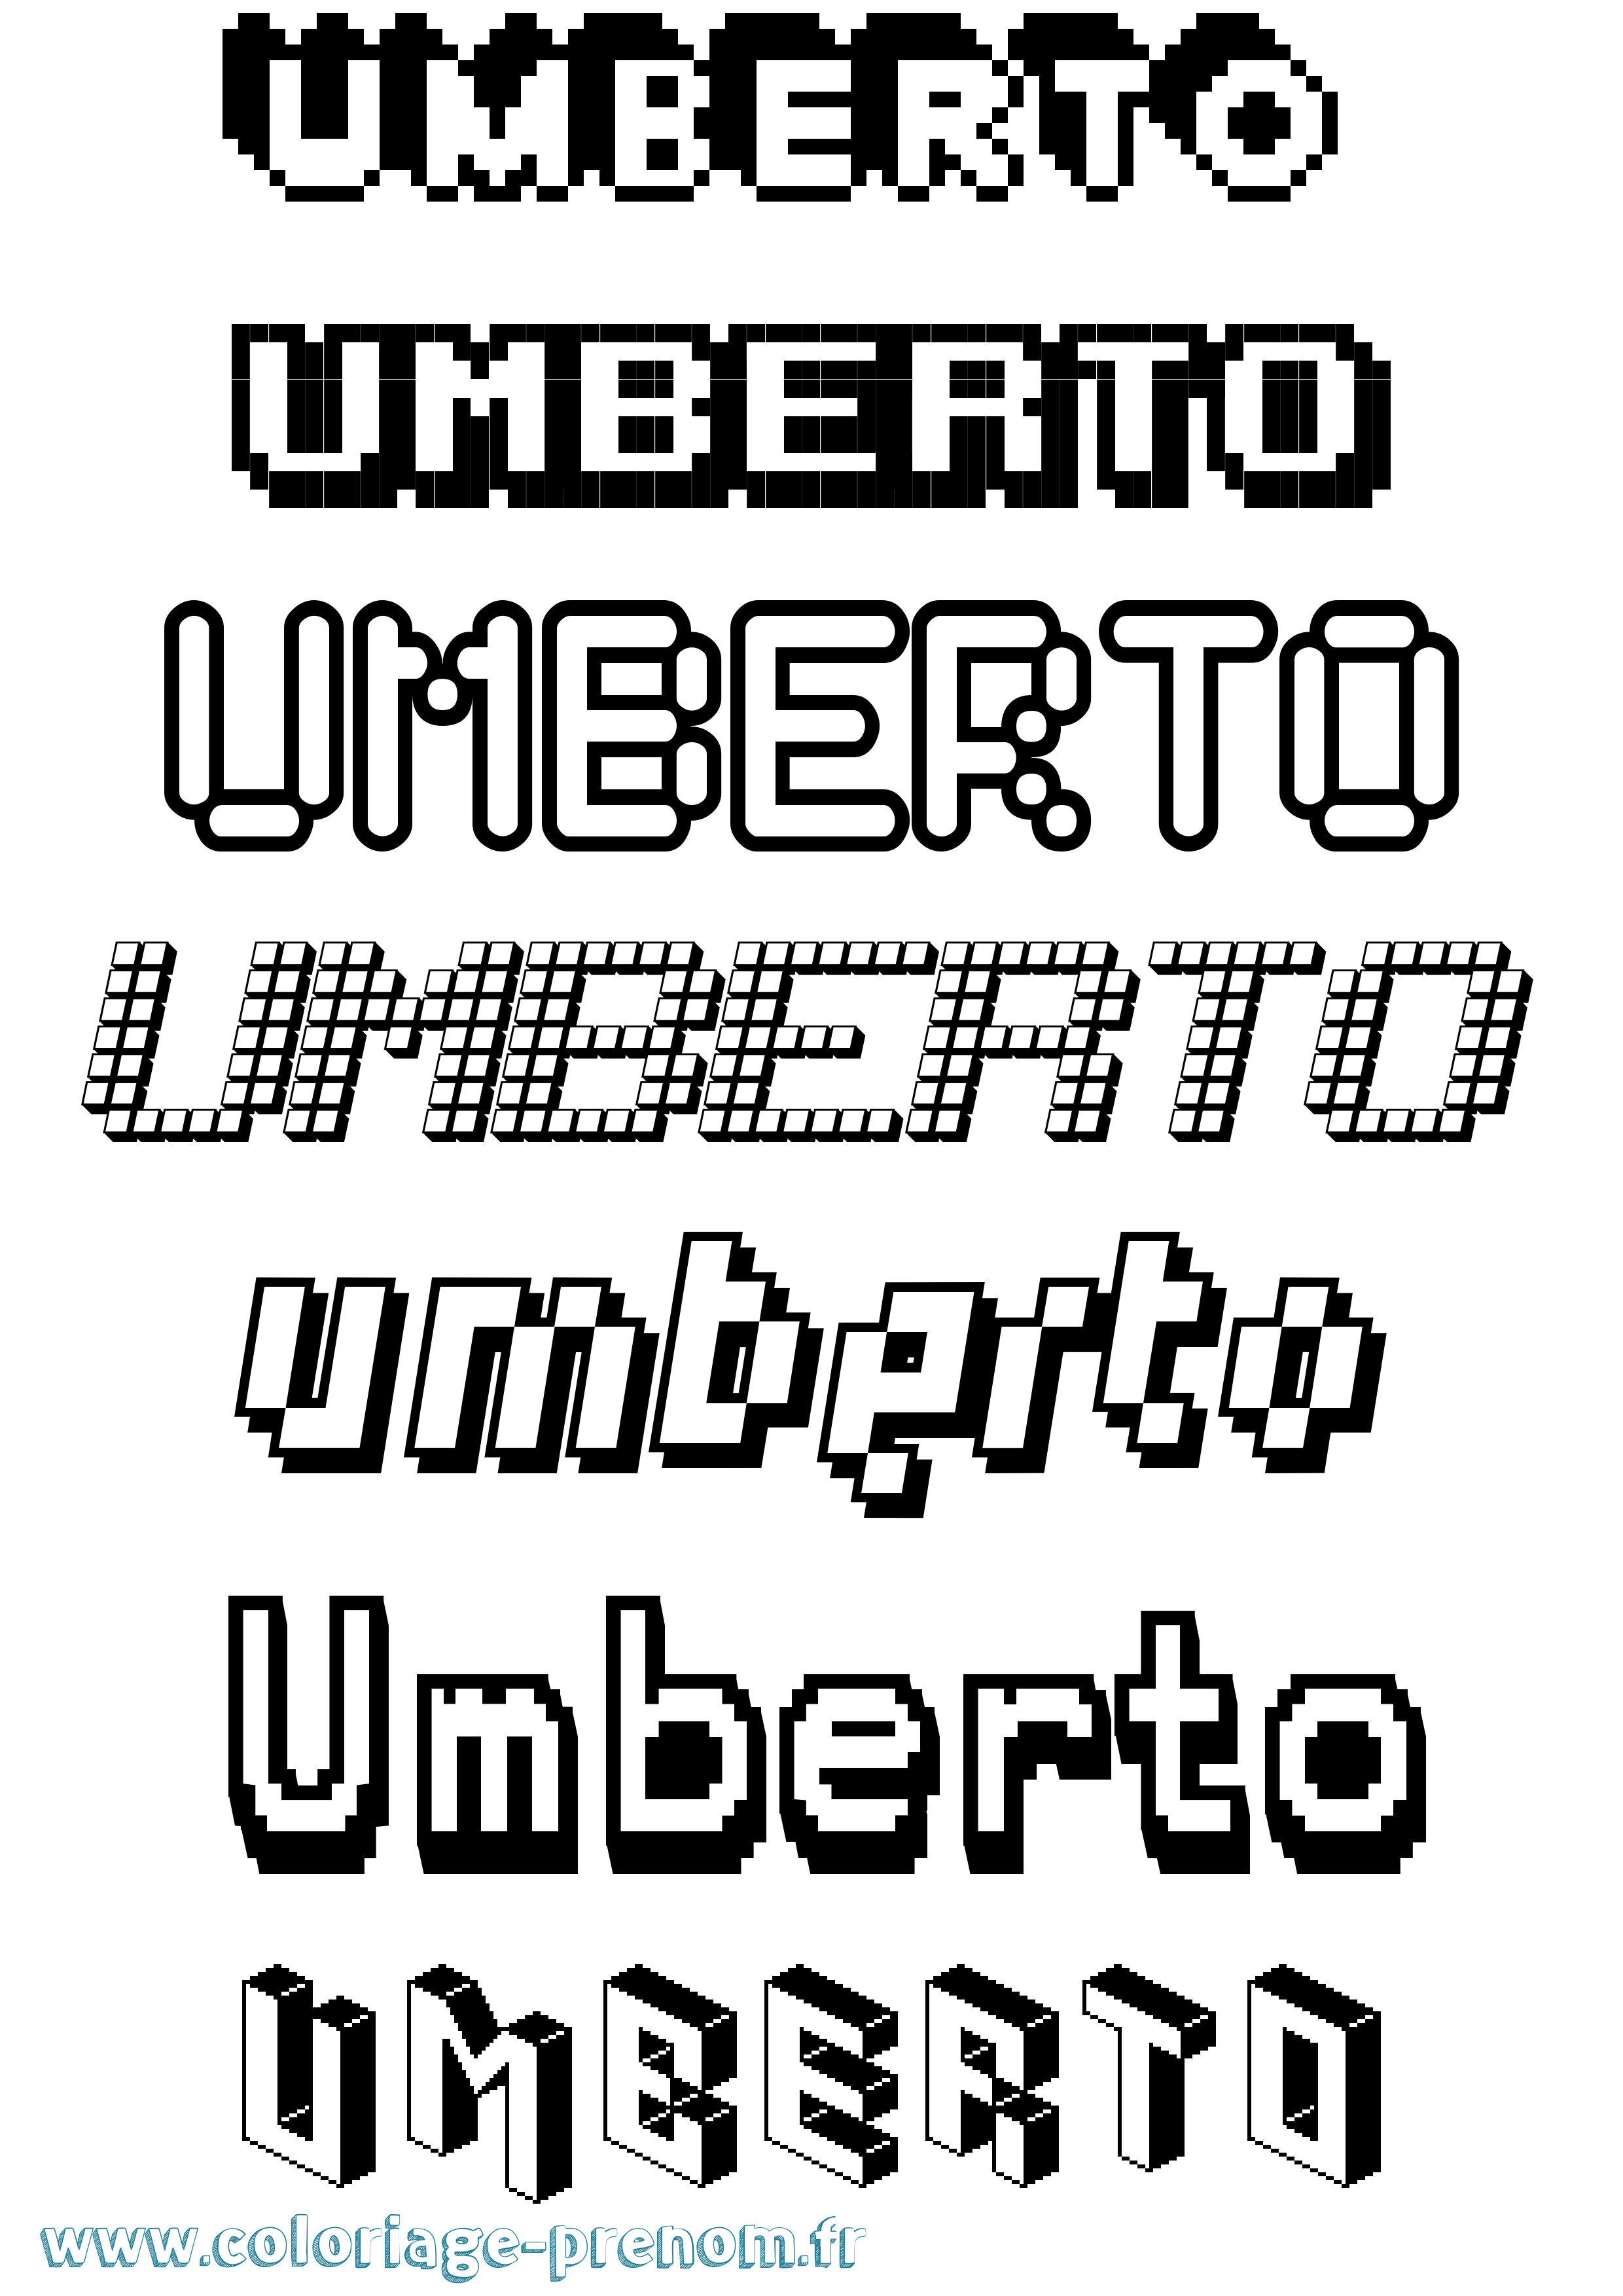 Coloriage prénom Umberto Pixel